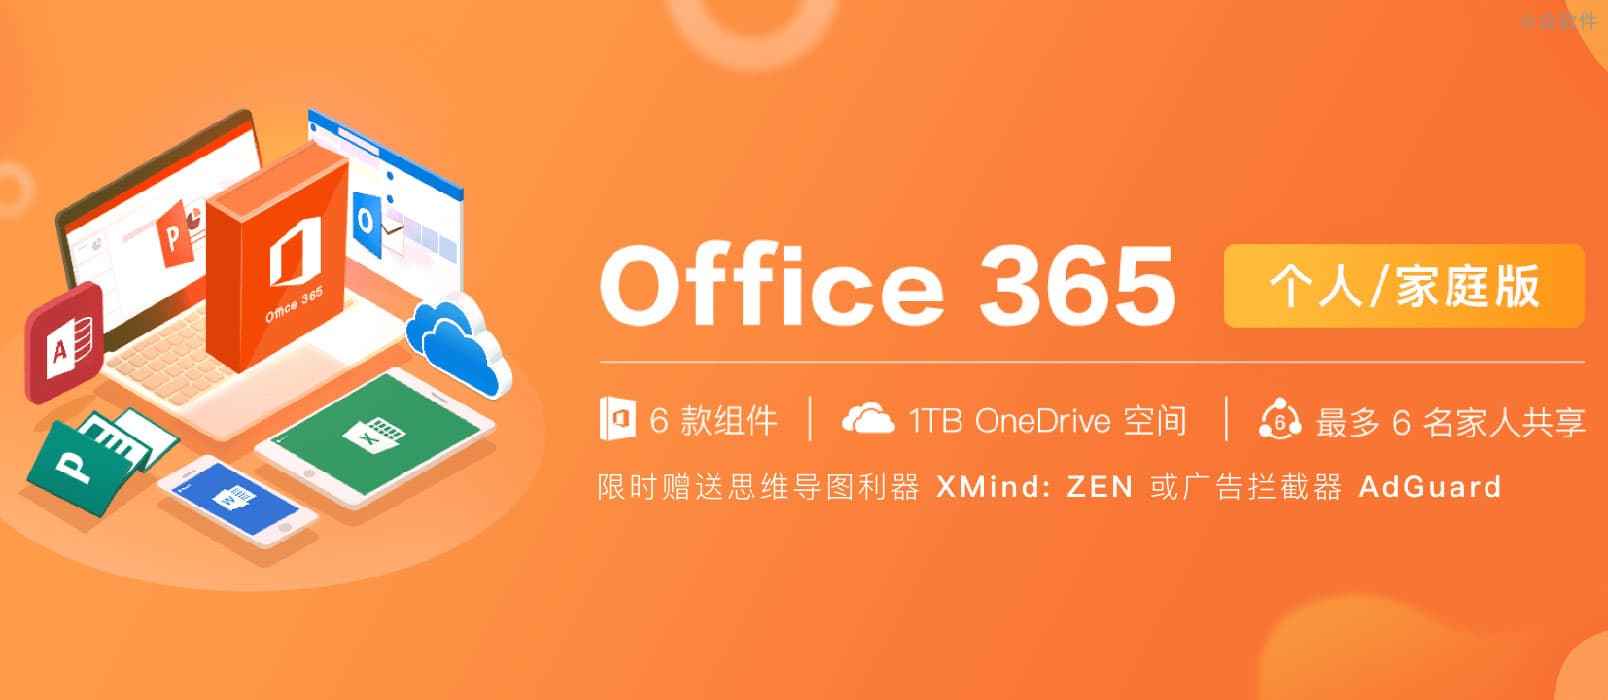 Office 365 个人/家庭版 5+ 折 特价，立即拥有正版 Word/Excel/PPT/Outlook 1